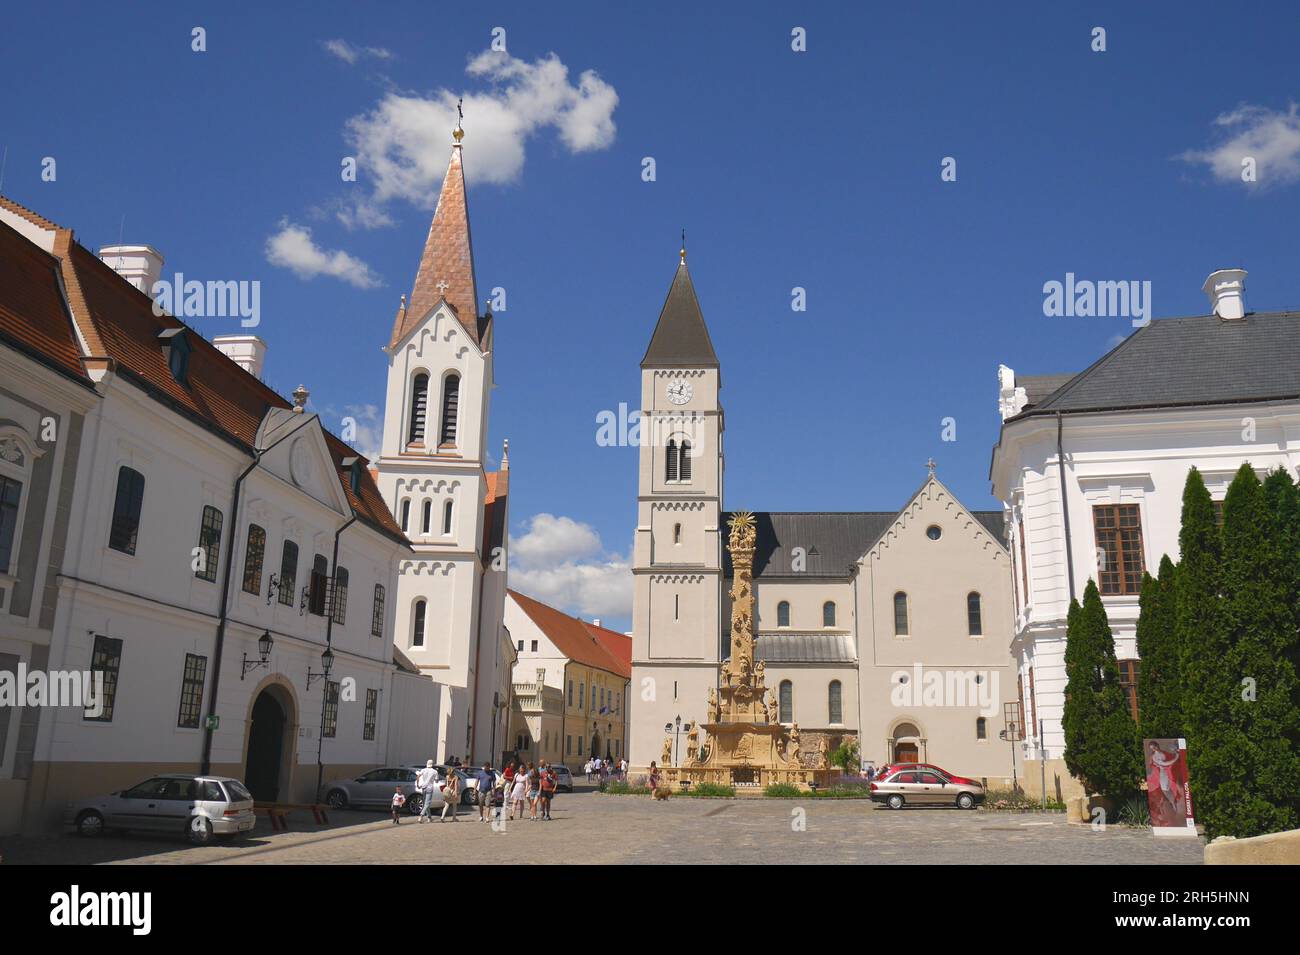 Holy Trinity Square with the Franciscan church, Saint Michael’s Catholic  Church  and the Hungarian baroque Holy Trinity Column, Veszprem, Hungary Stock Photo